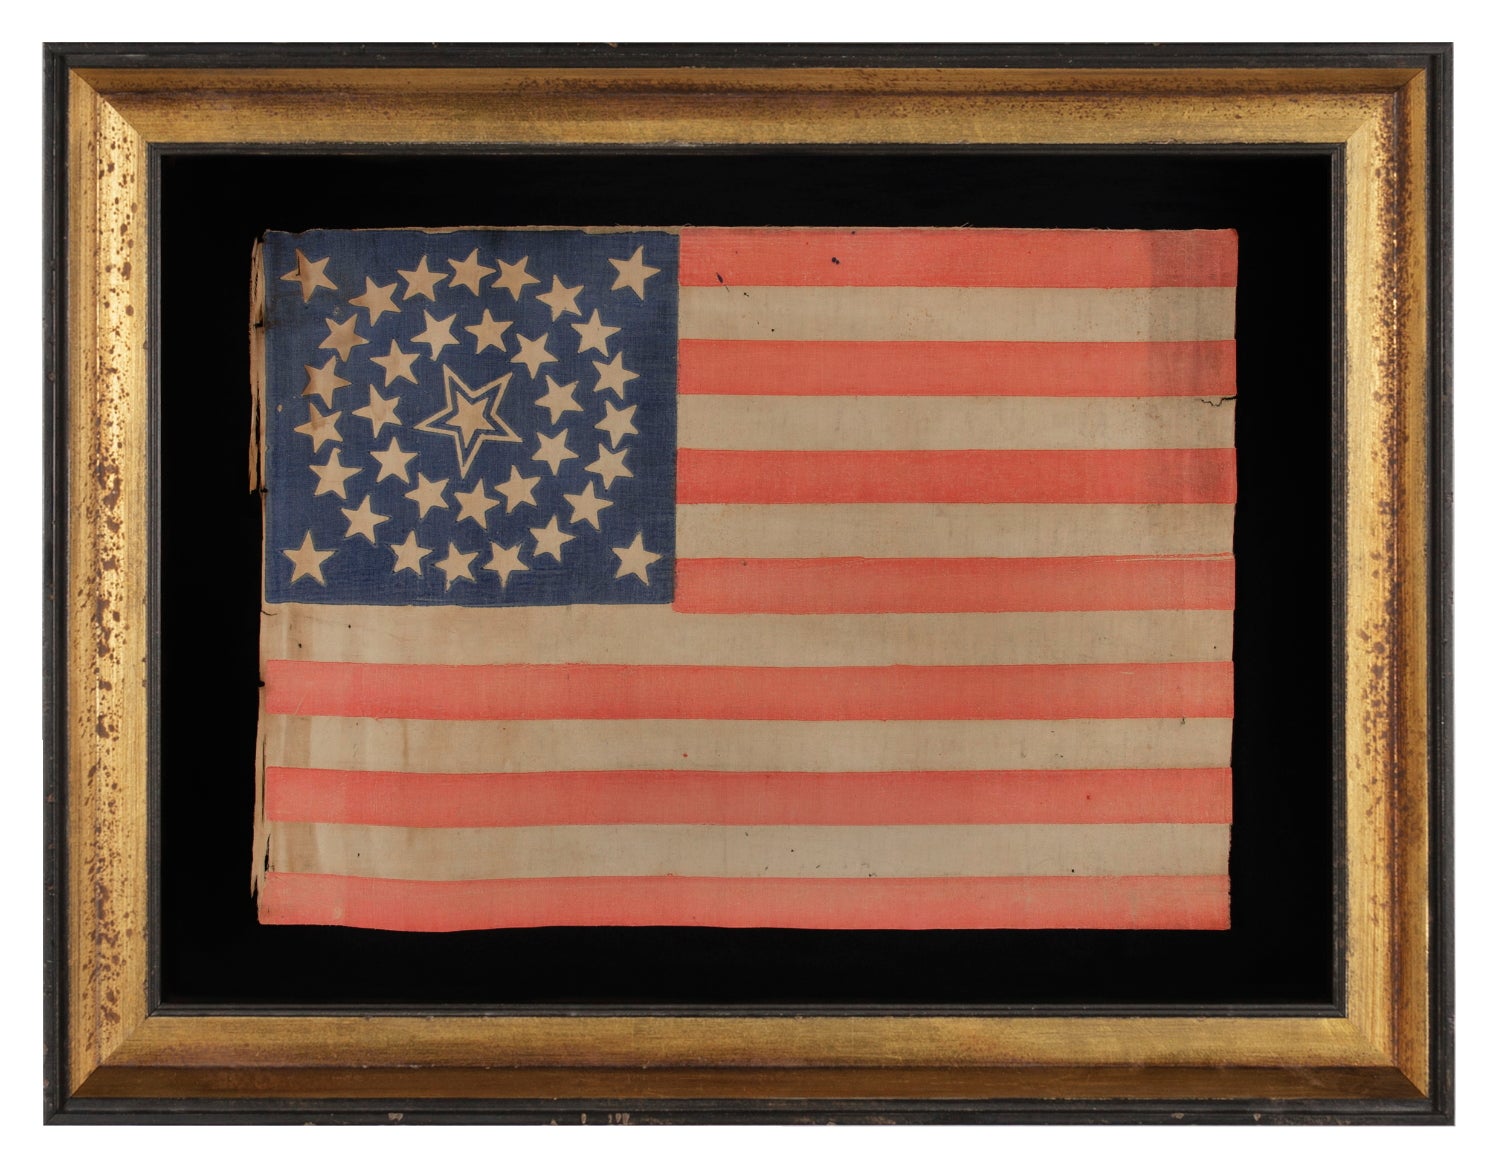 35 Star Antique American Civil War Flag, West Virginia Statehood, 1863-65